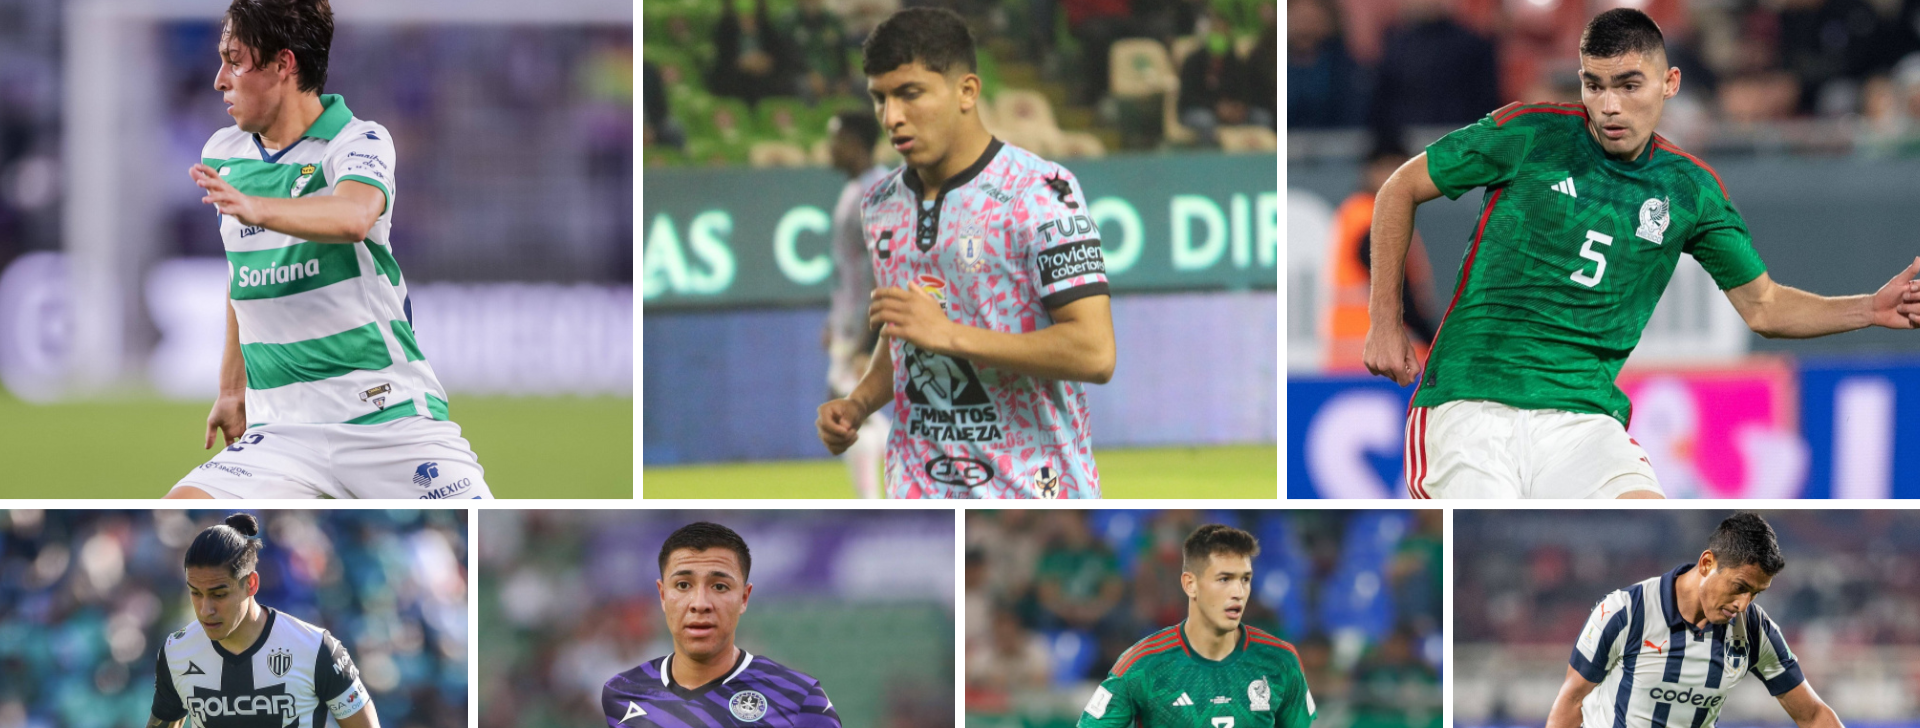 futbolistas noro seleccion mexicana 1 1